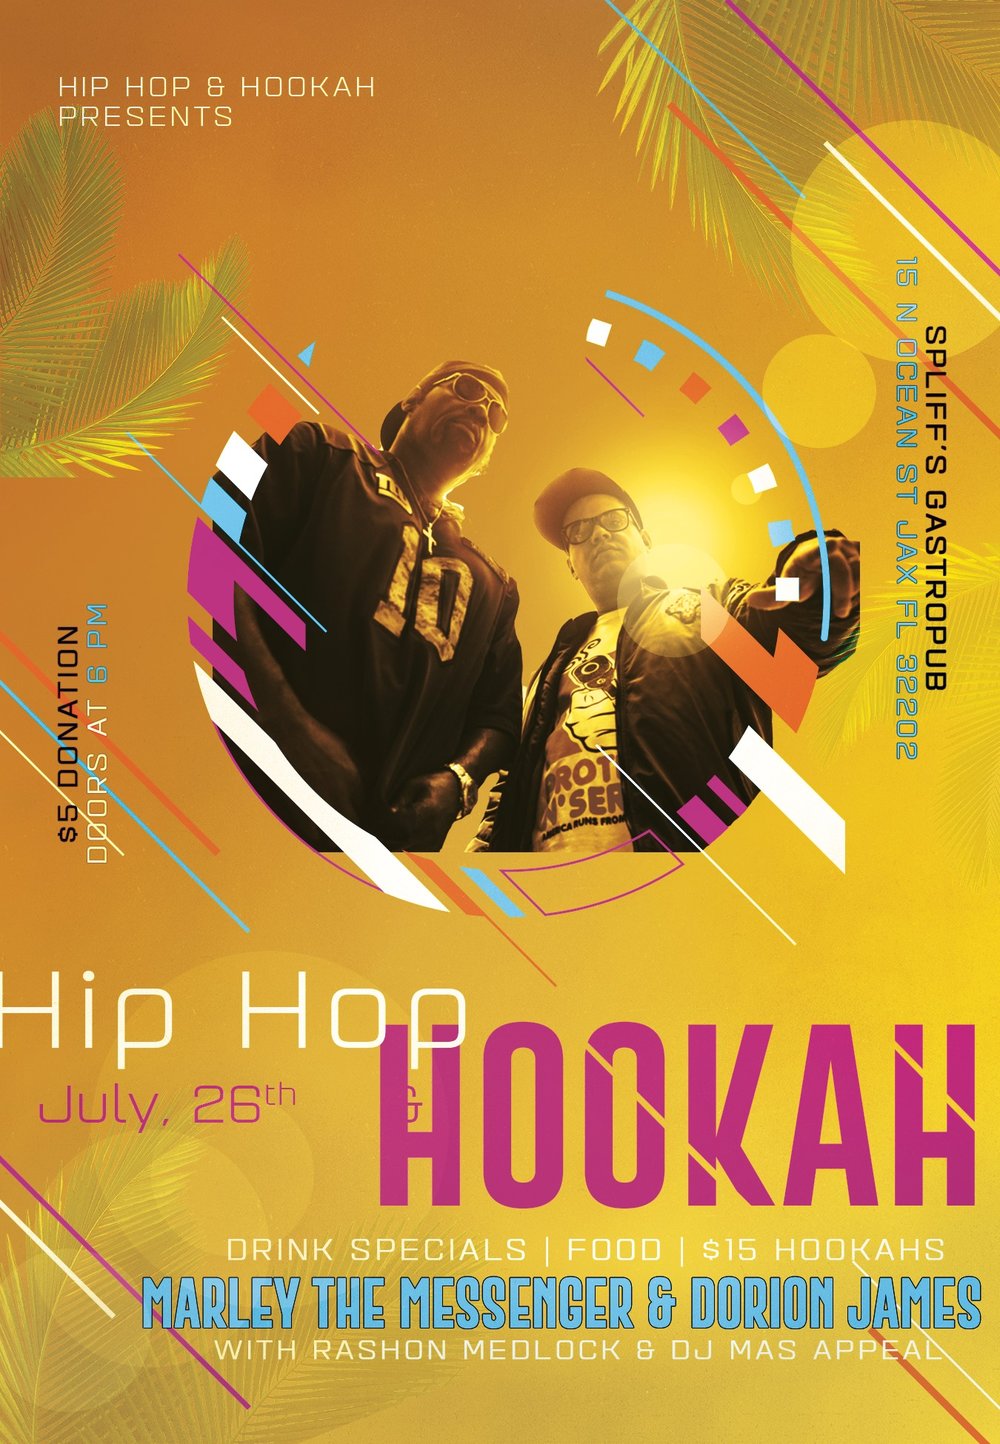 Hip Hop &amp; Hookah